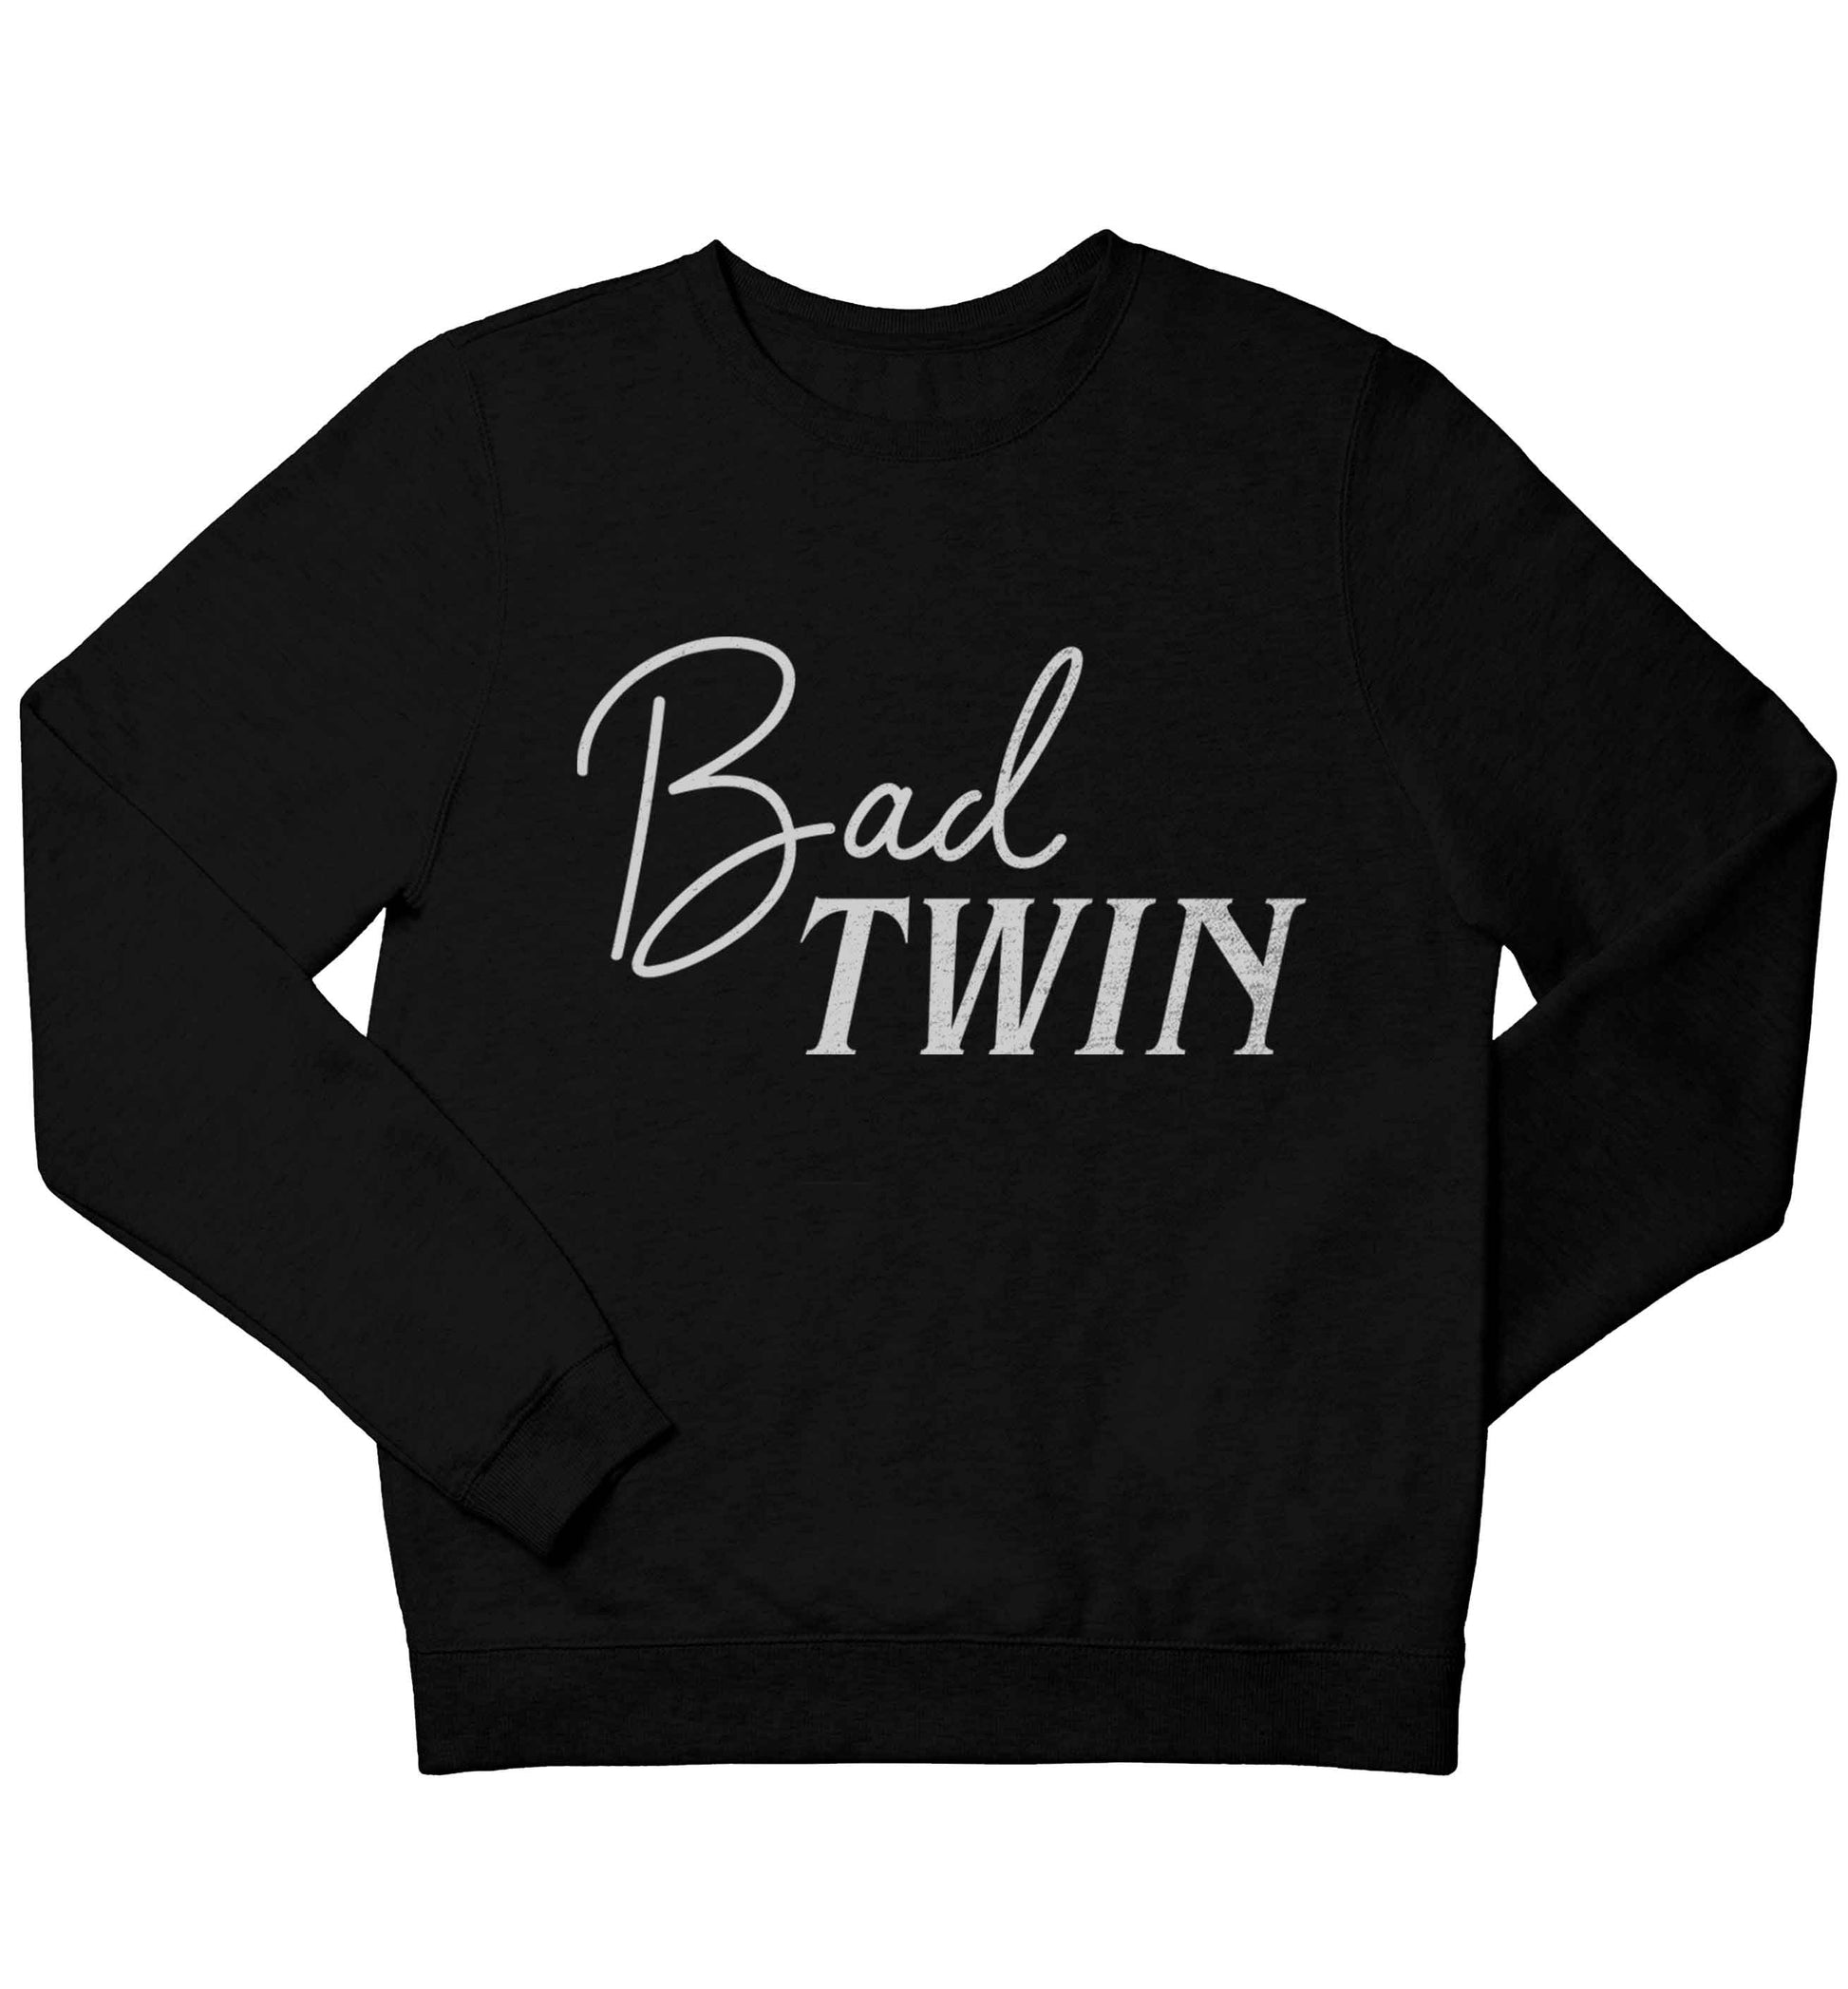 Bad twin children's black sweater 12-13 Years